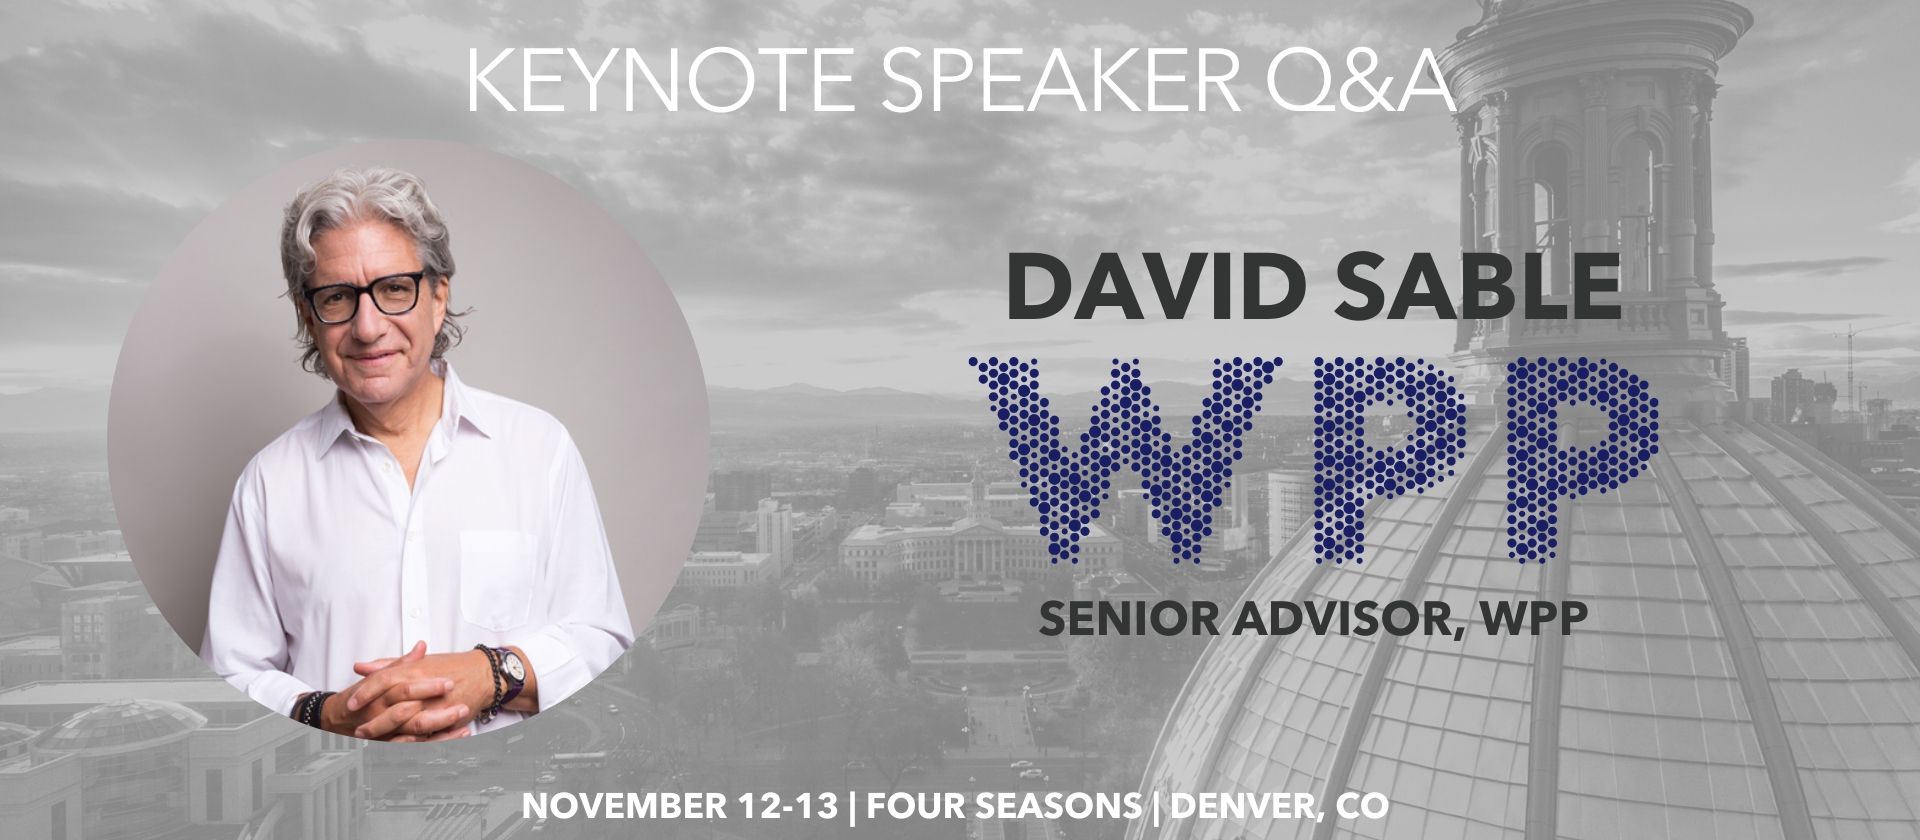 David Sable Keynote Speaker Q&A WPP